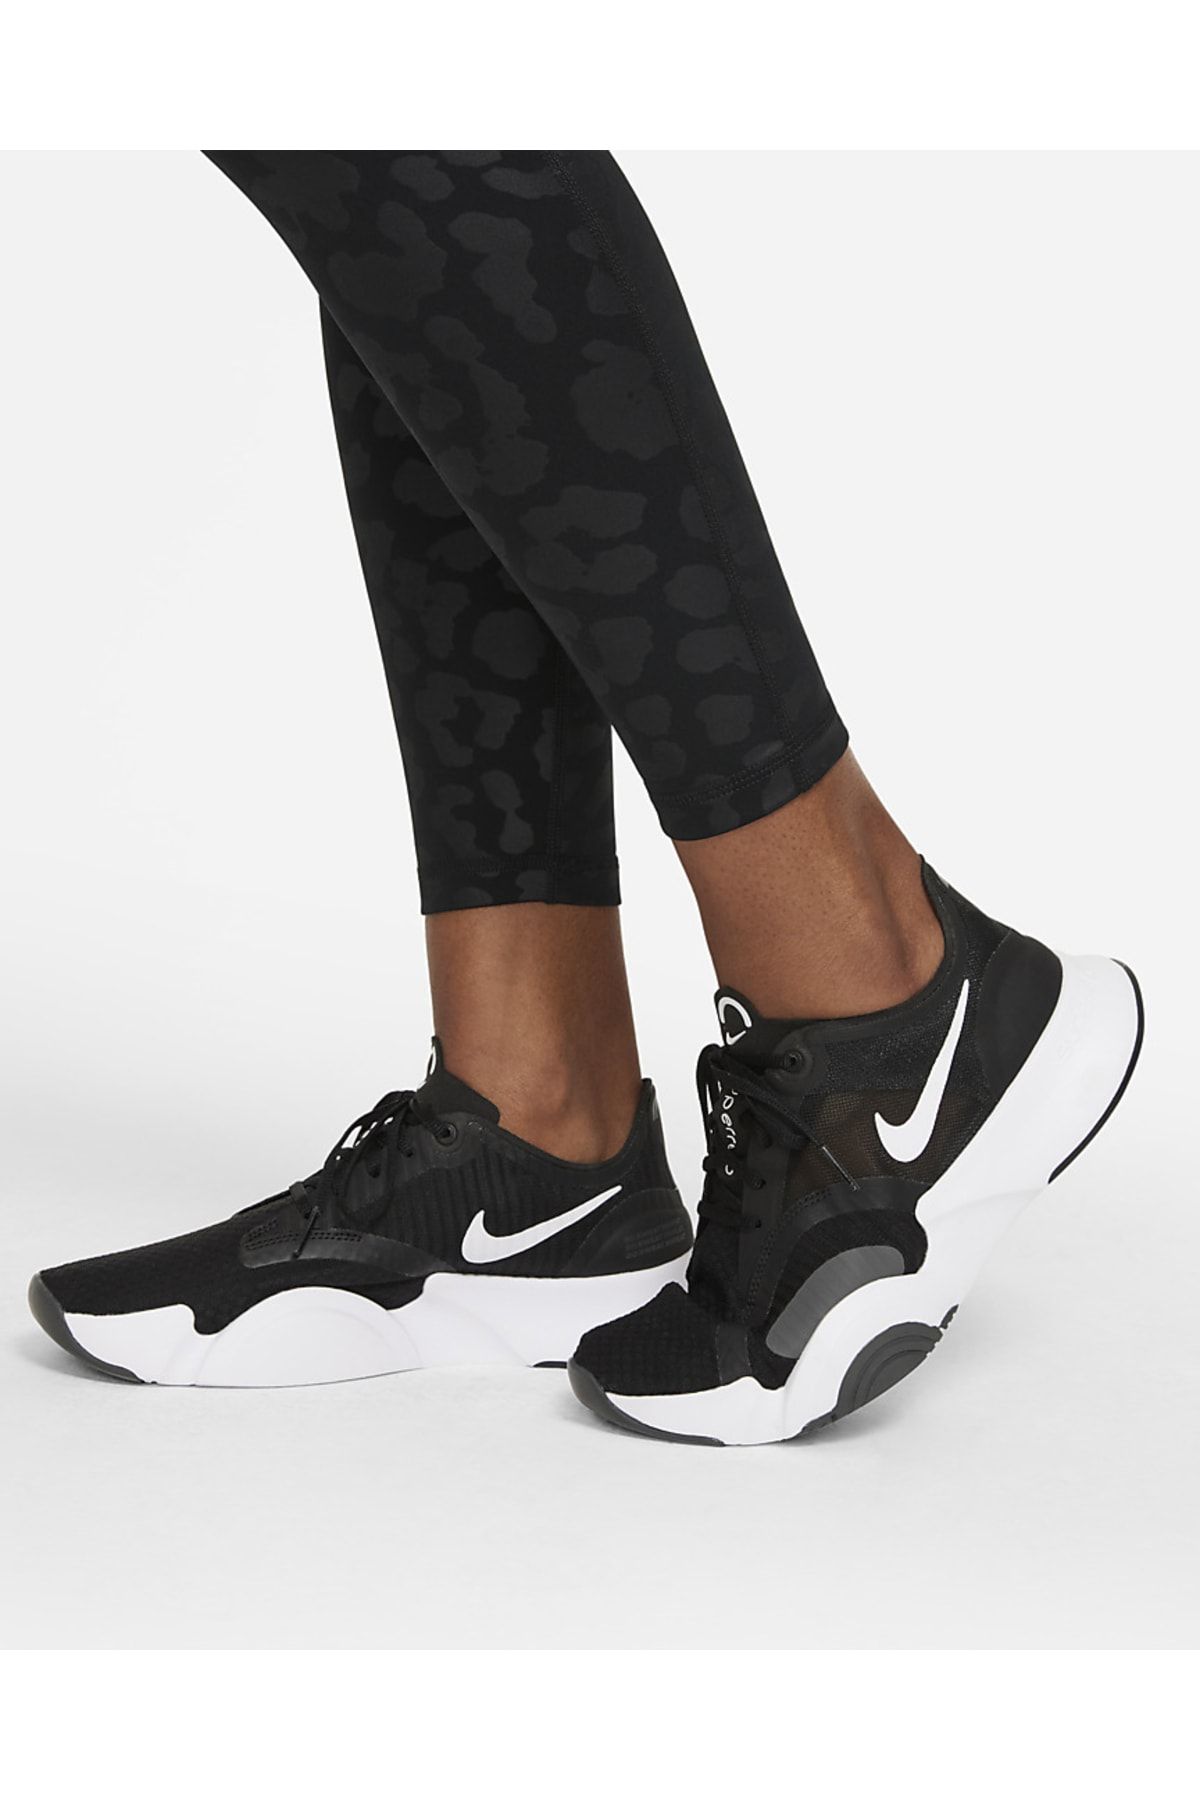 Nike Pro Dri-fit Lepard Shine Printed High-waisted 7/8 Women's Tights -  Black - Trendyol